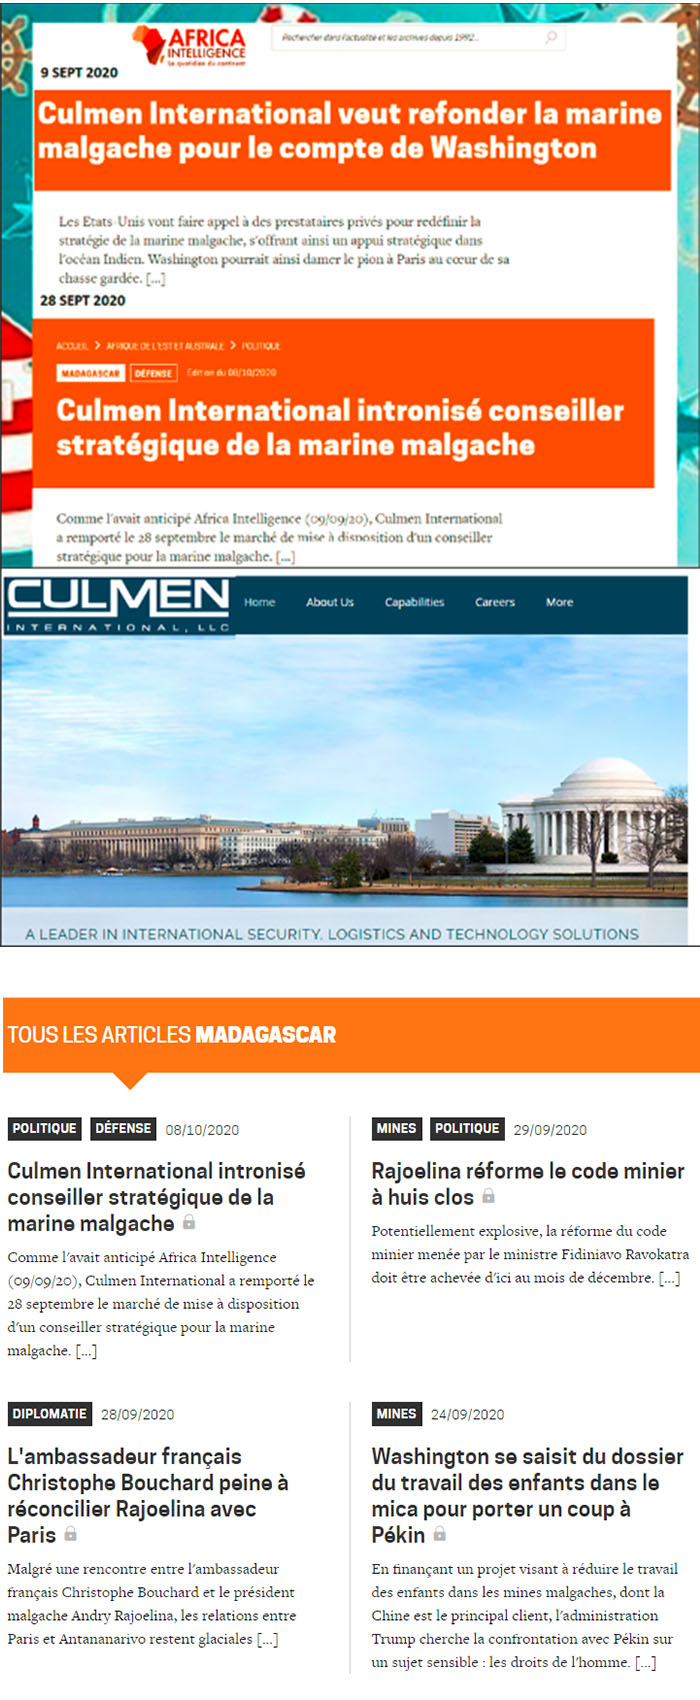 Culmen International intronisé conseiller stratégique de la marine malgache